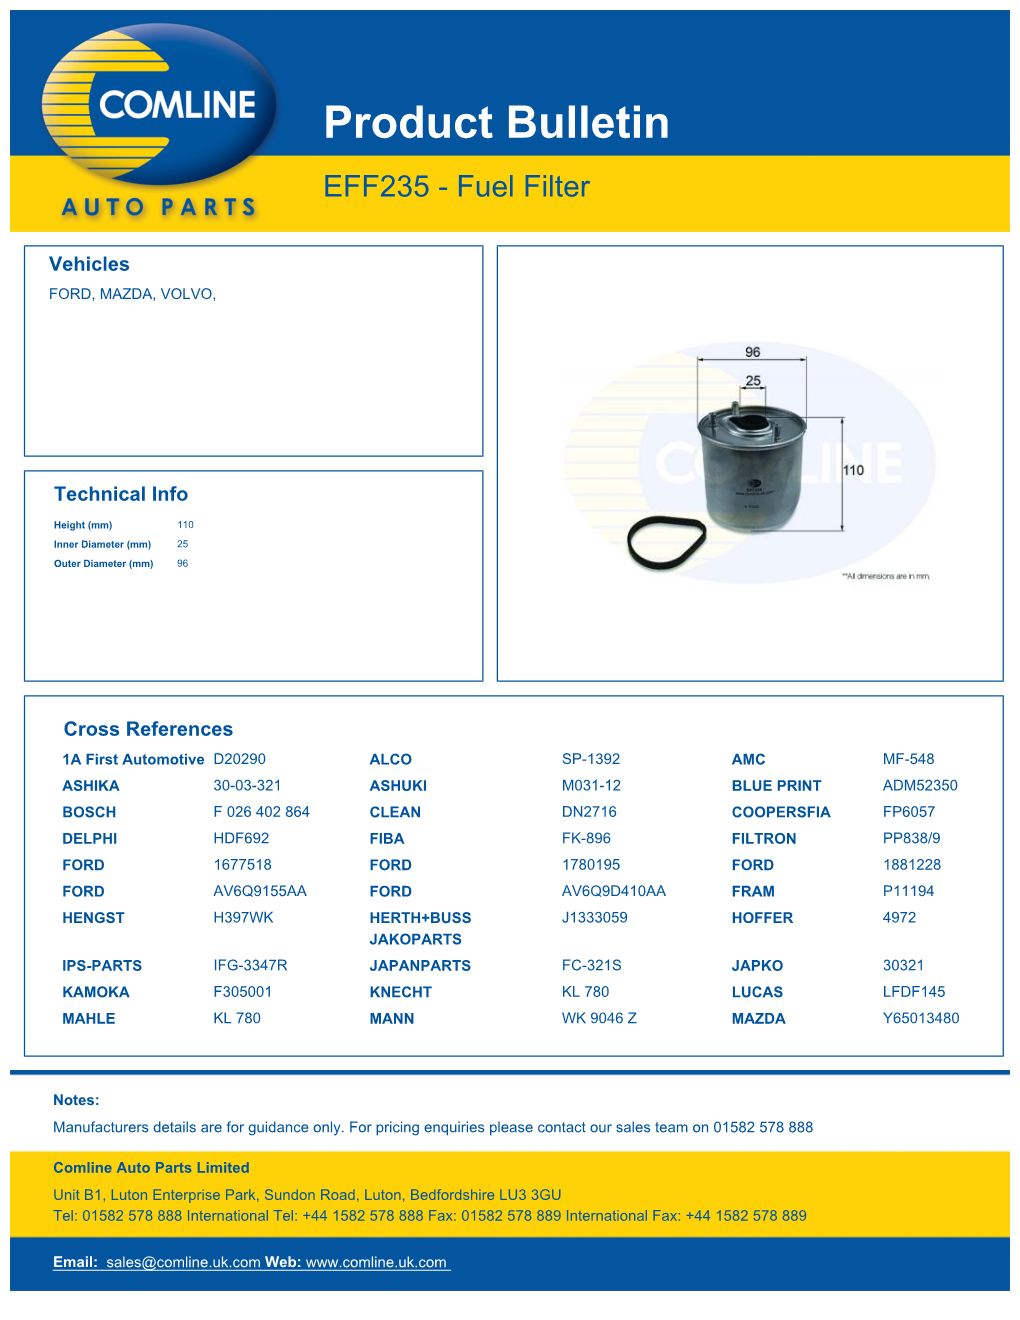 Product Bulletin EFF235 - Fuel Filter